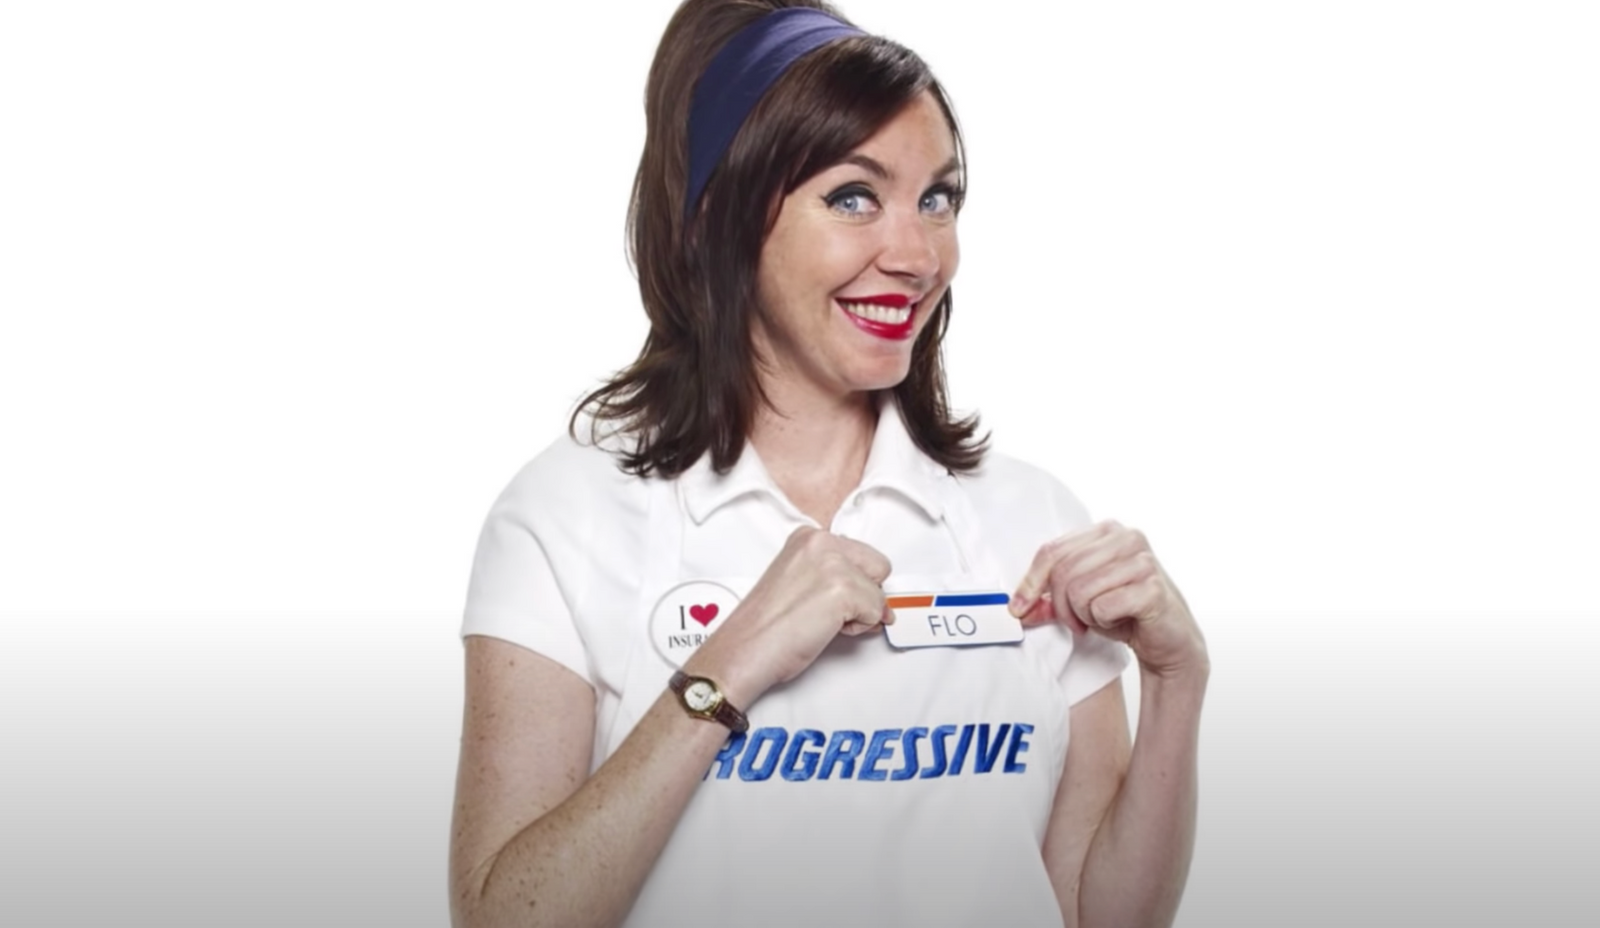 Did Flo leave Progressive?